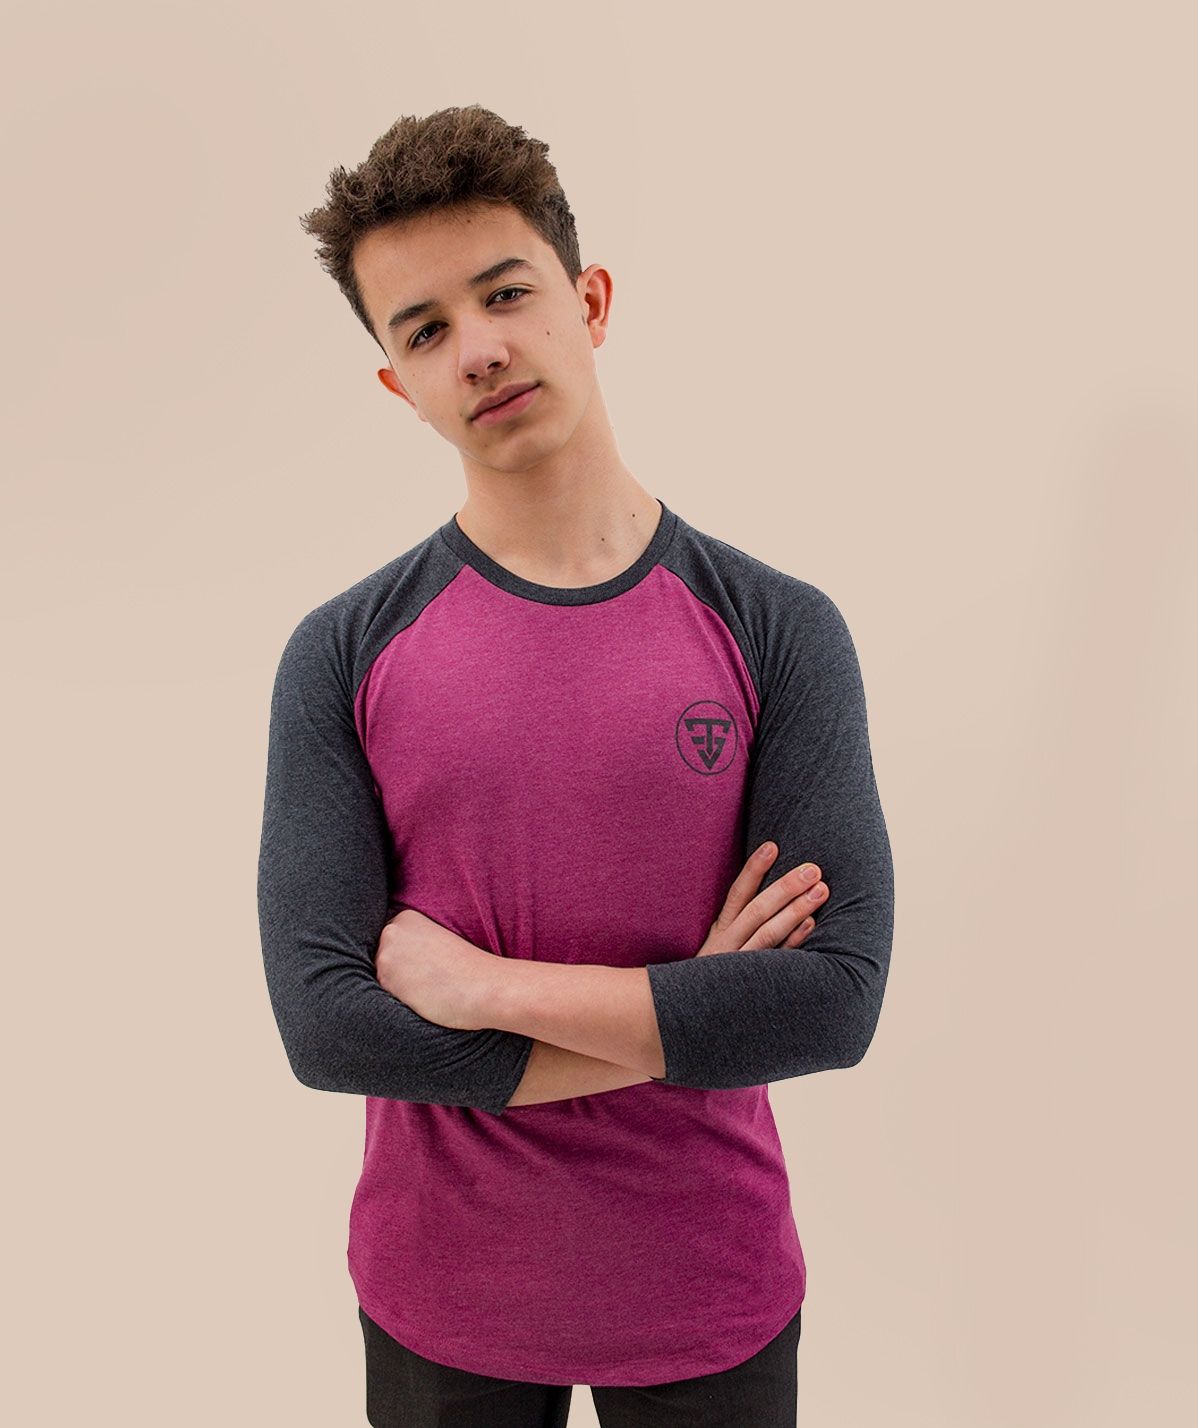 Tshirt pour Homme - Teeshirt sportif - Vêtements de sport Tibo Inshape